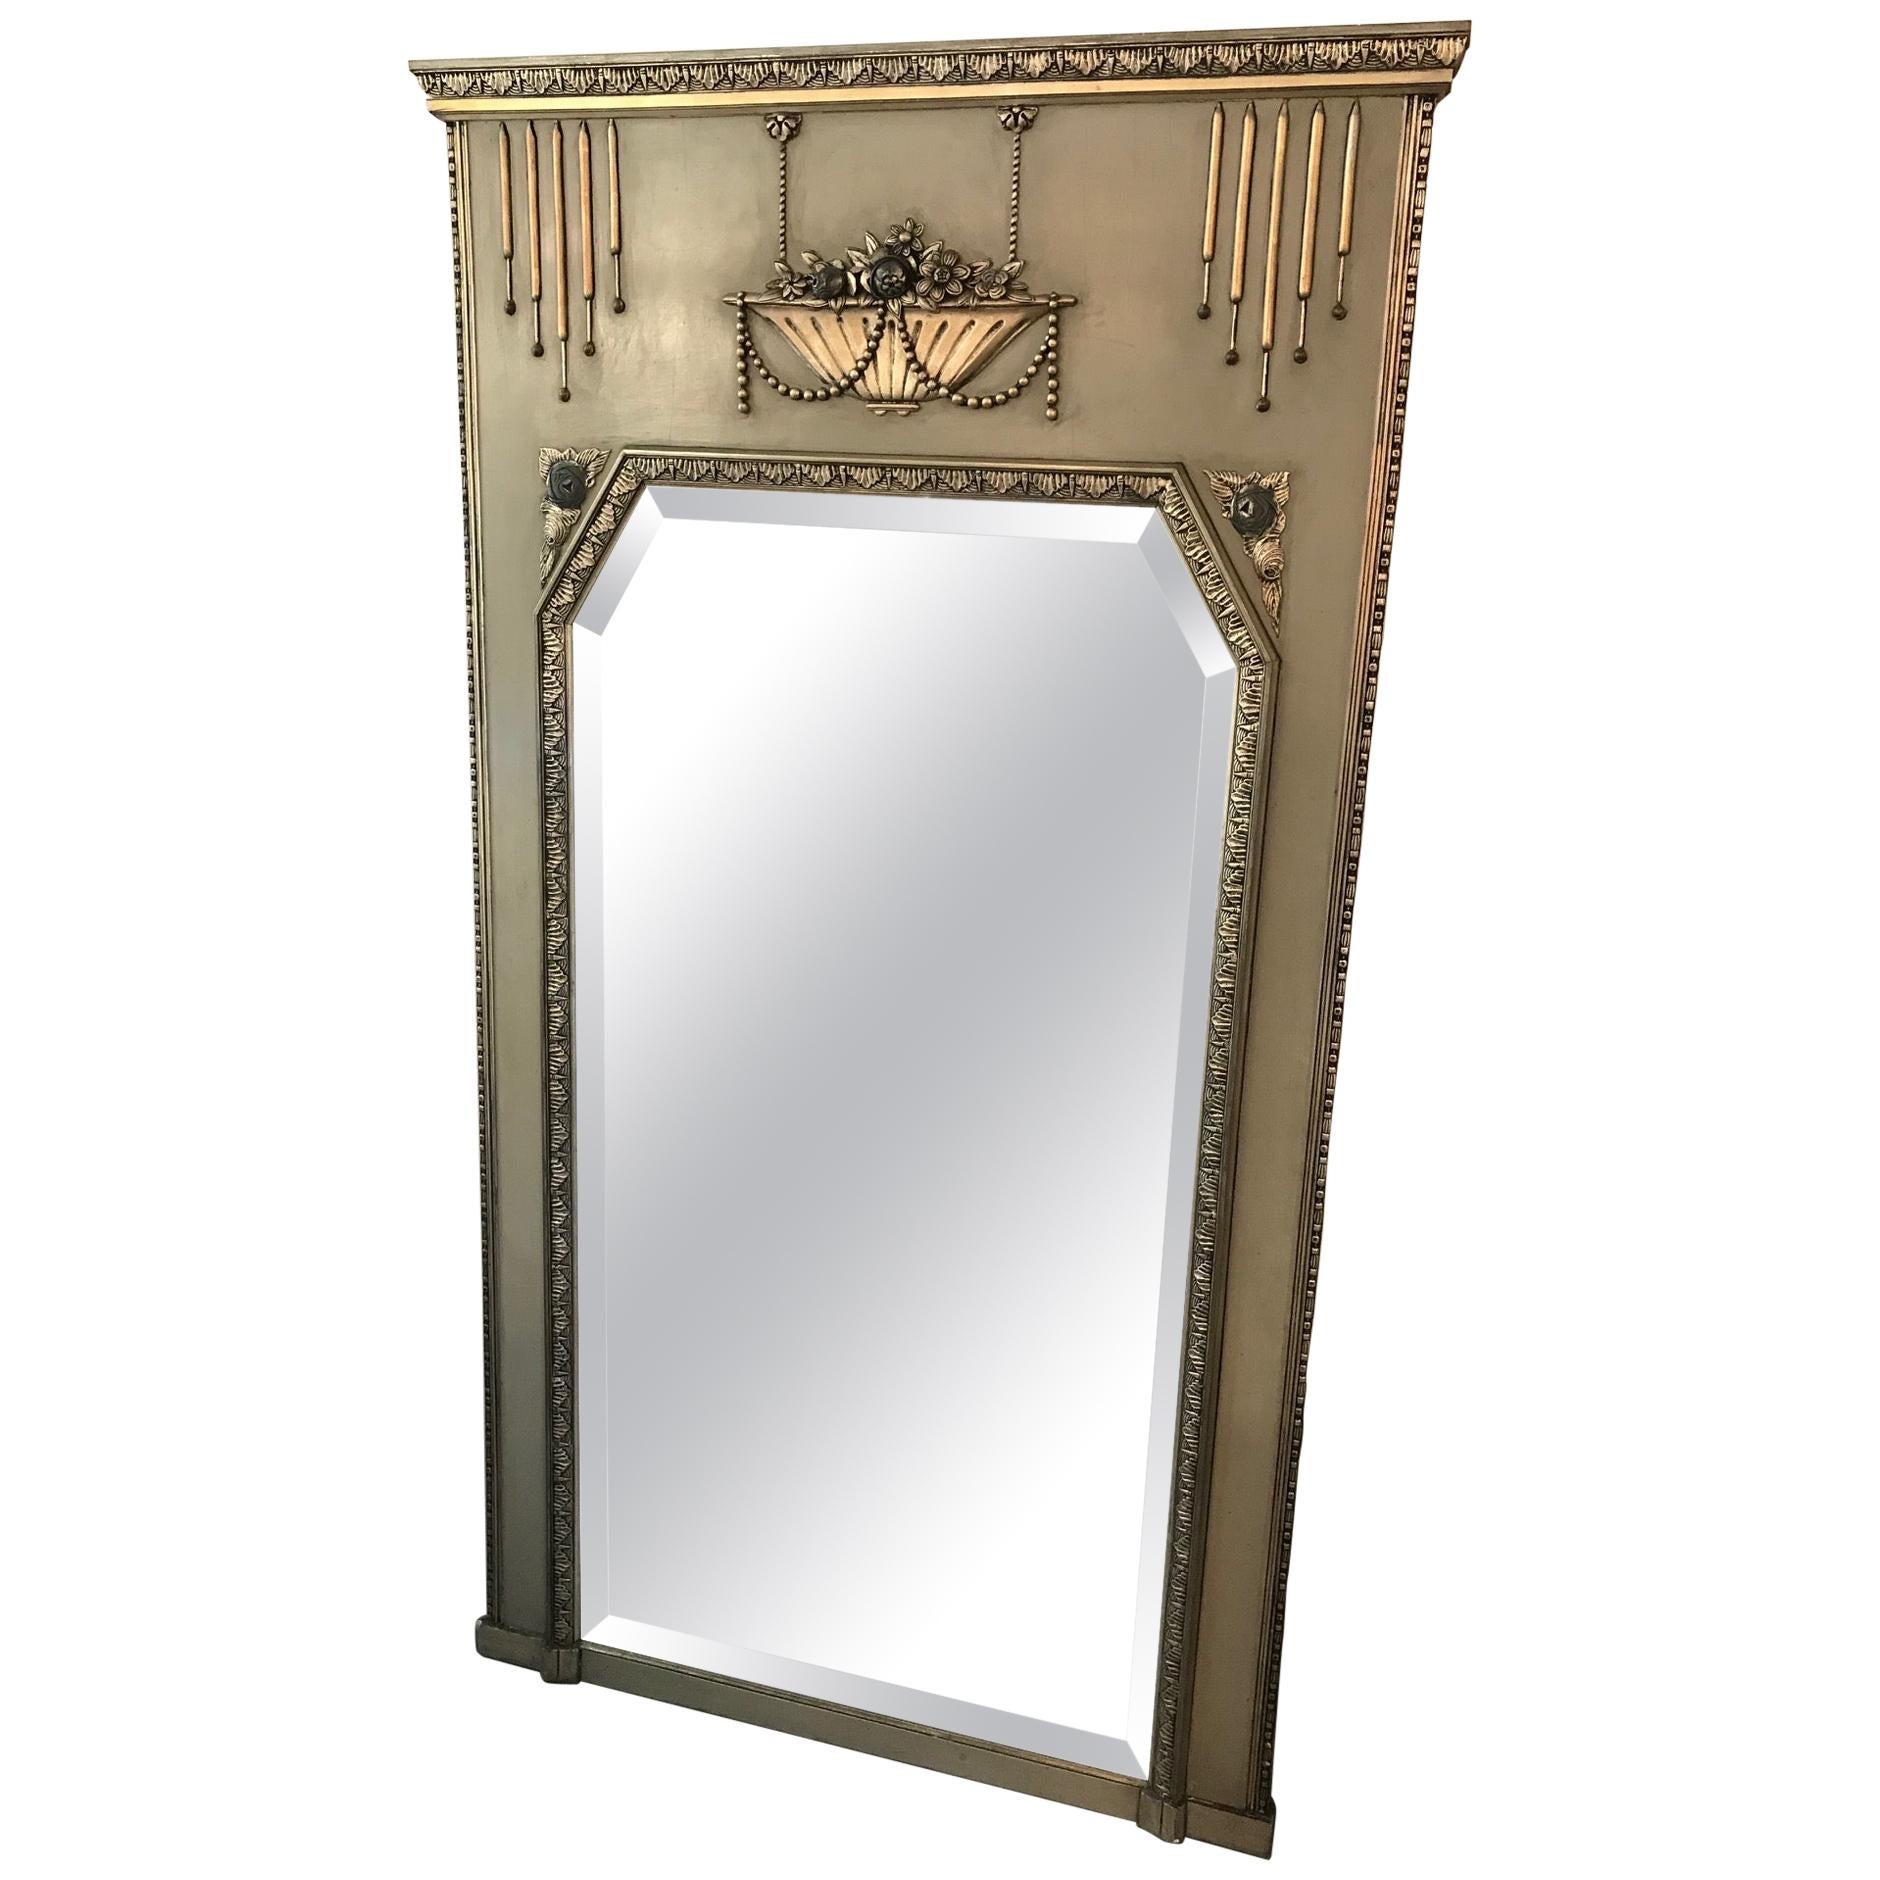 20th century French Art Deco Golden Wood Mirror, 1930s